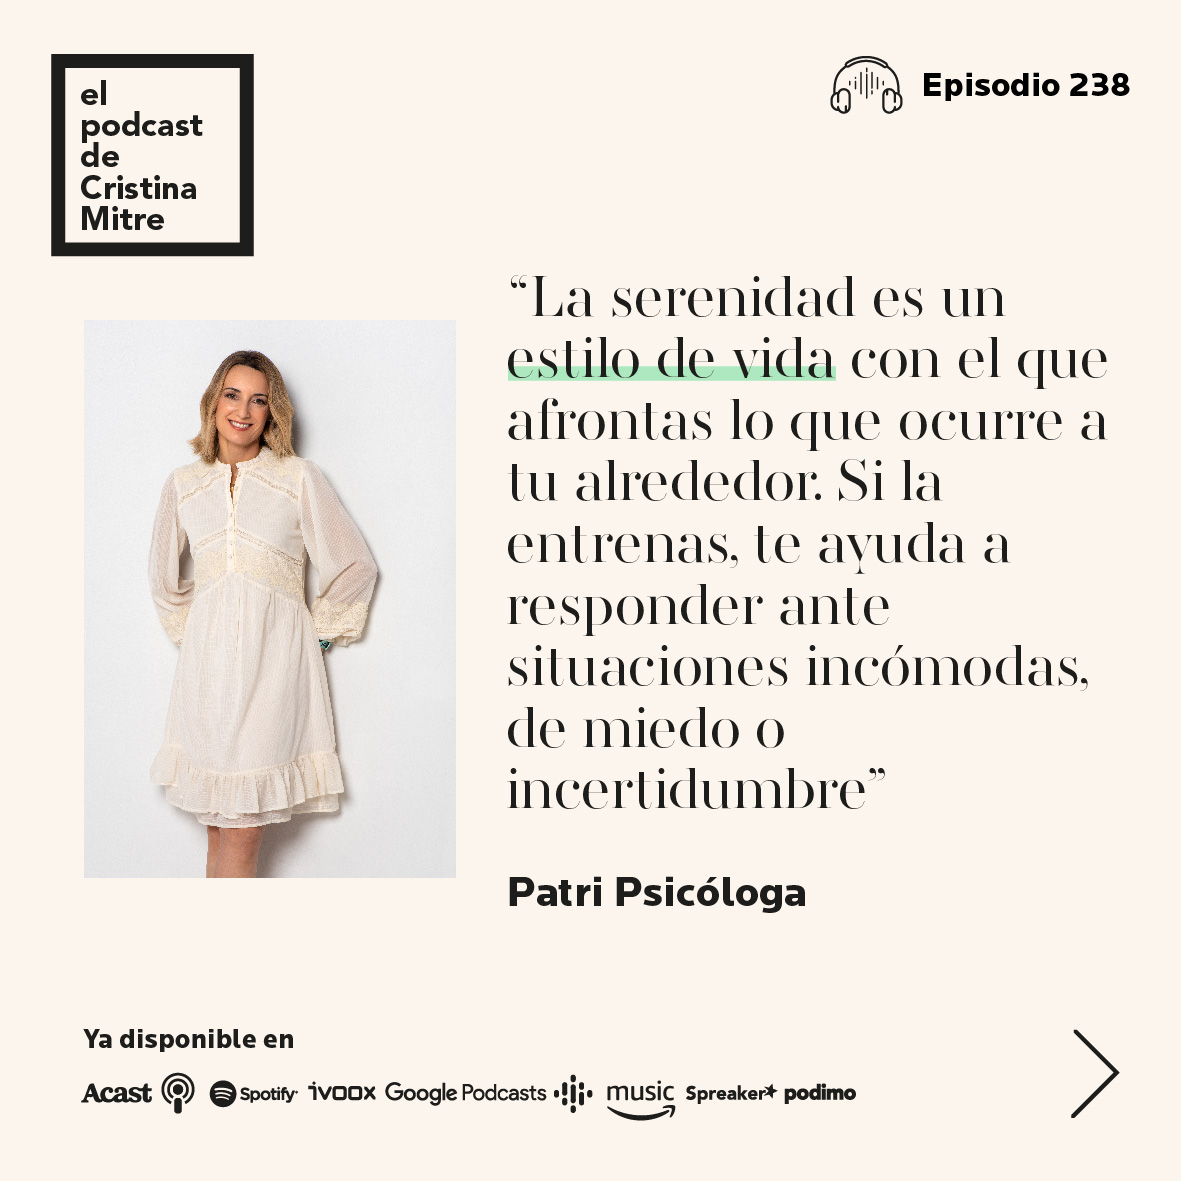 El podcast de Cristina Mitre Patri Psicologa Serenidad